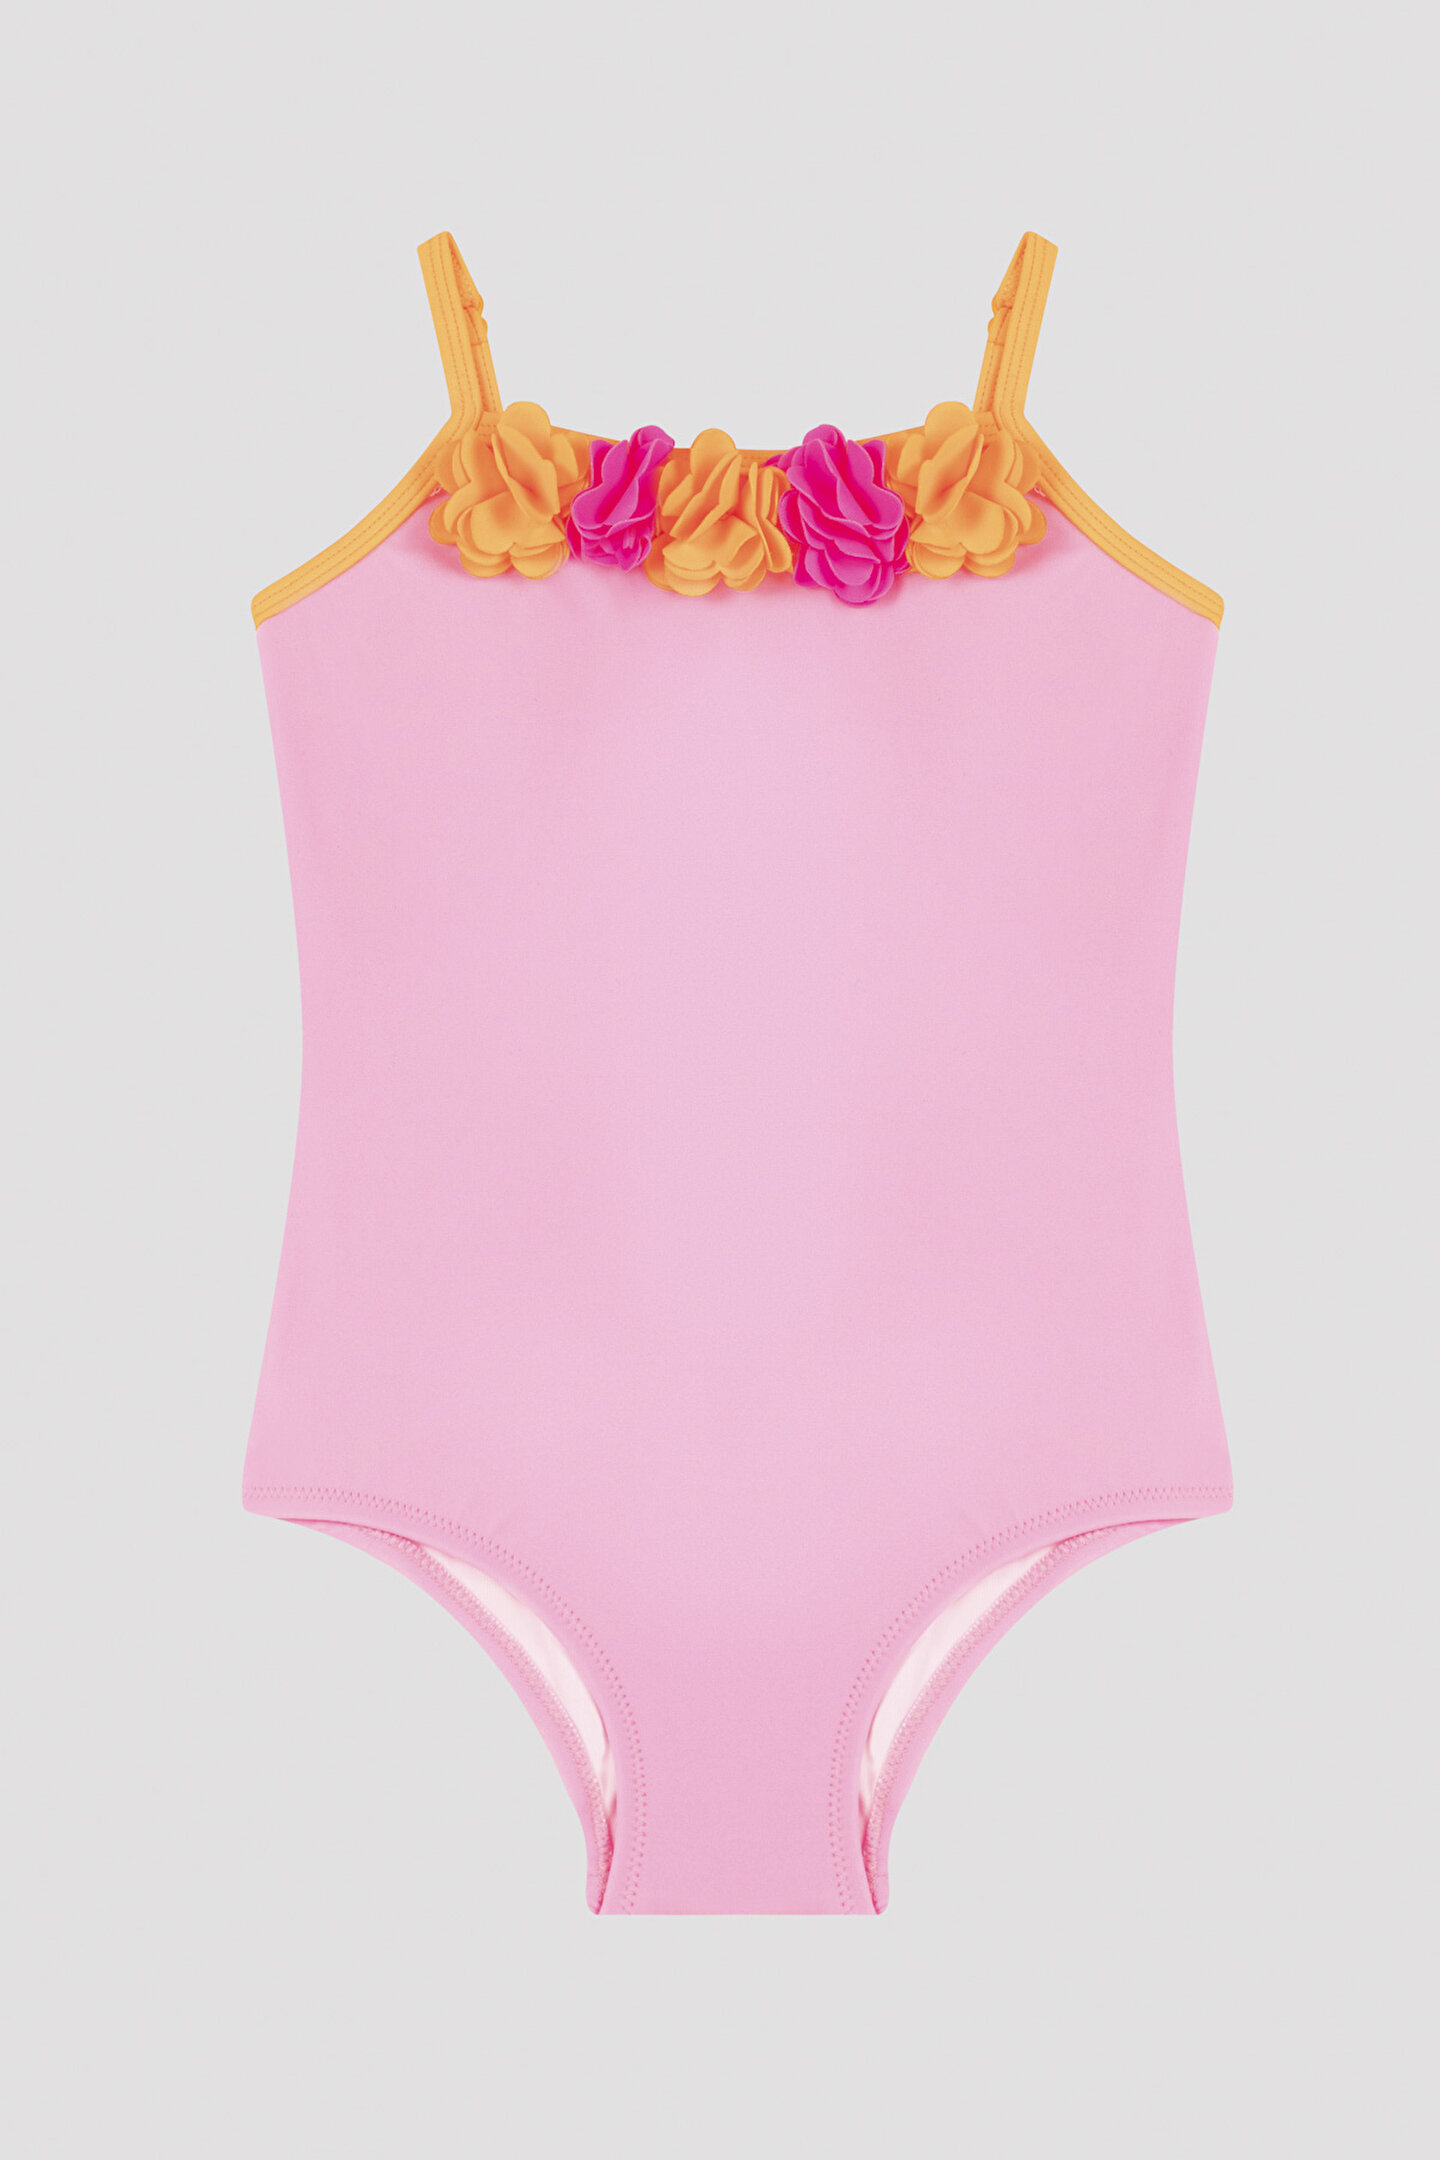 Pink Flower Suit - 1